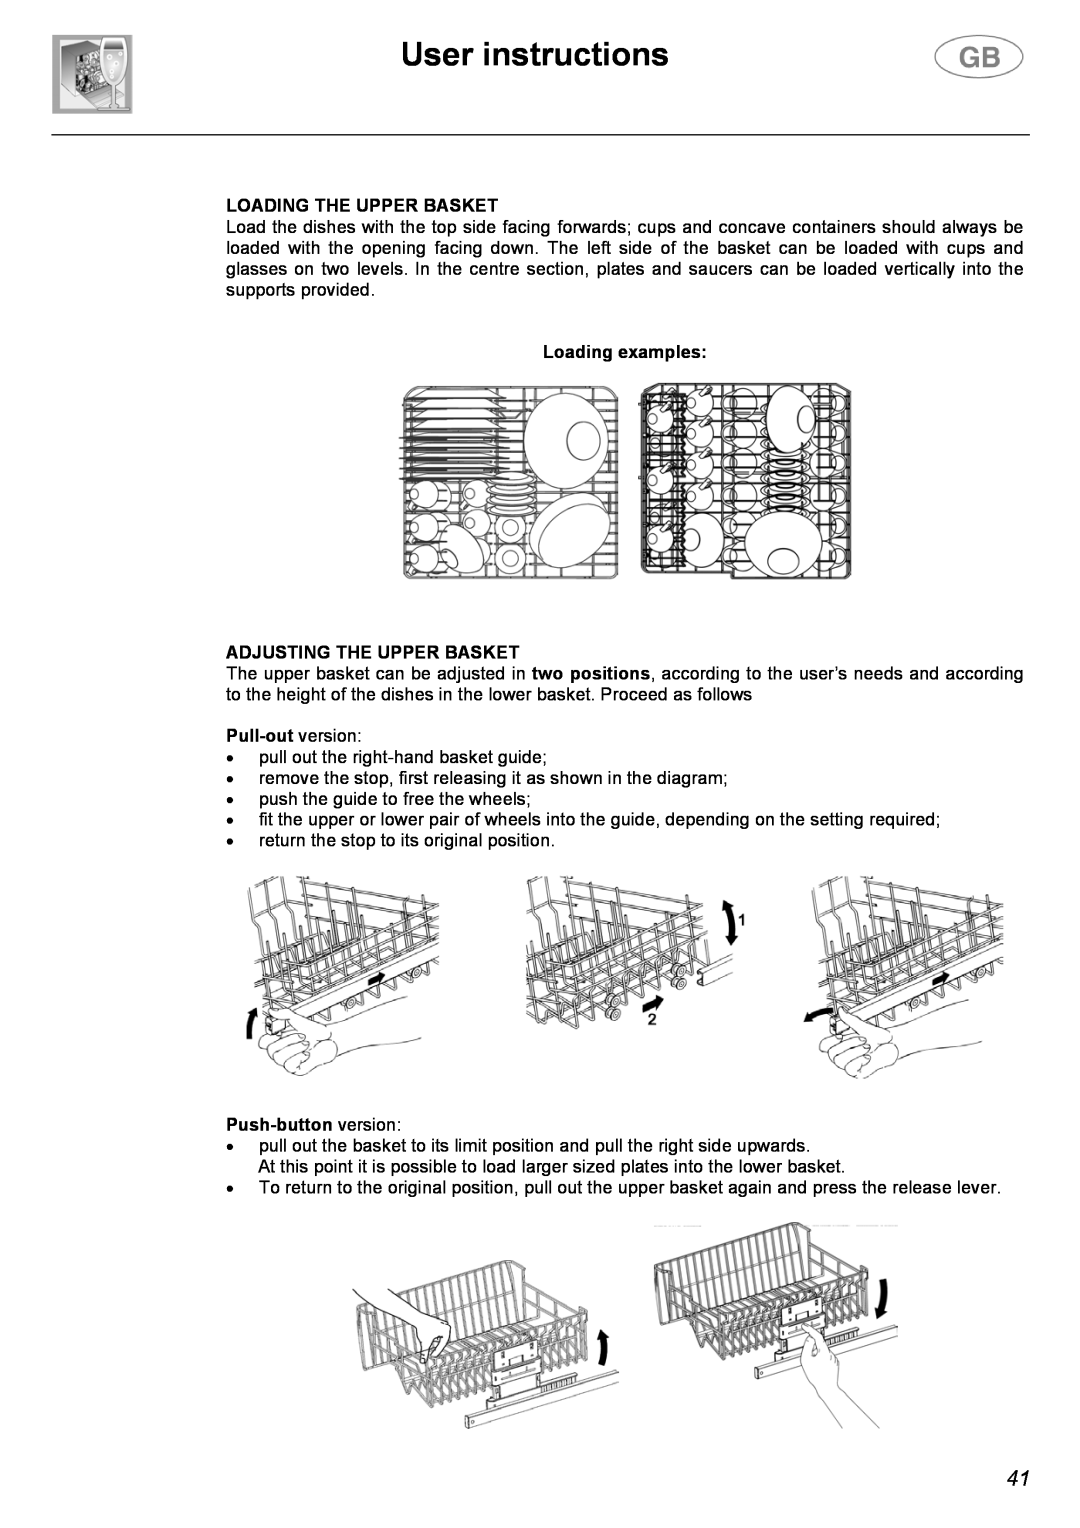 Smeg EL05 User instructions, Loading The Upper Basket, Loading examples ADJUSTING THE UPPER BASKET, Pull-out version 